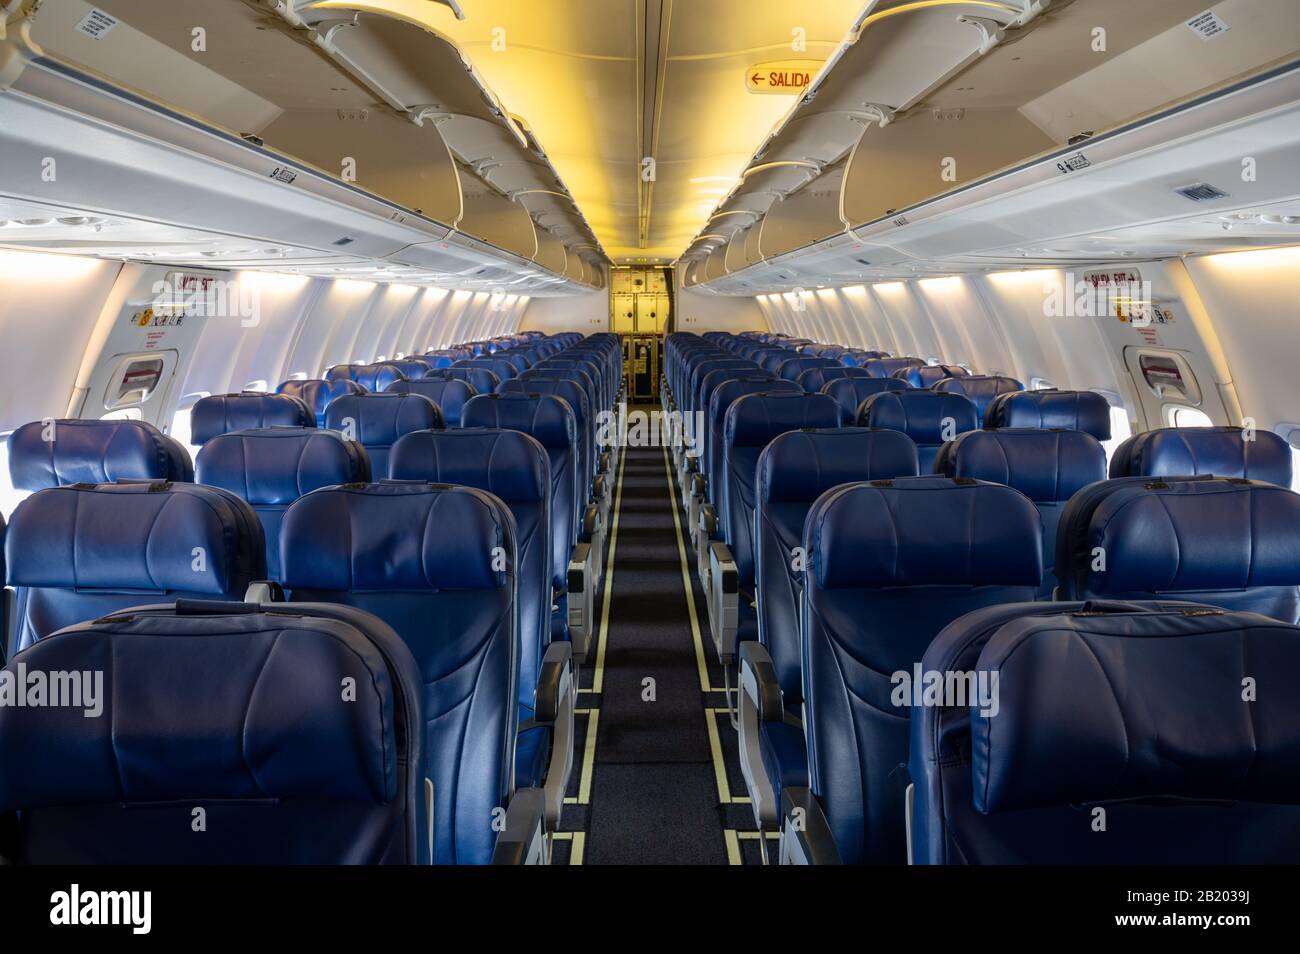 Empty interior of Boeing 737 narrow body passenger aircraft Stock Photo